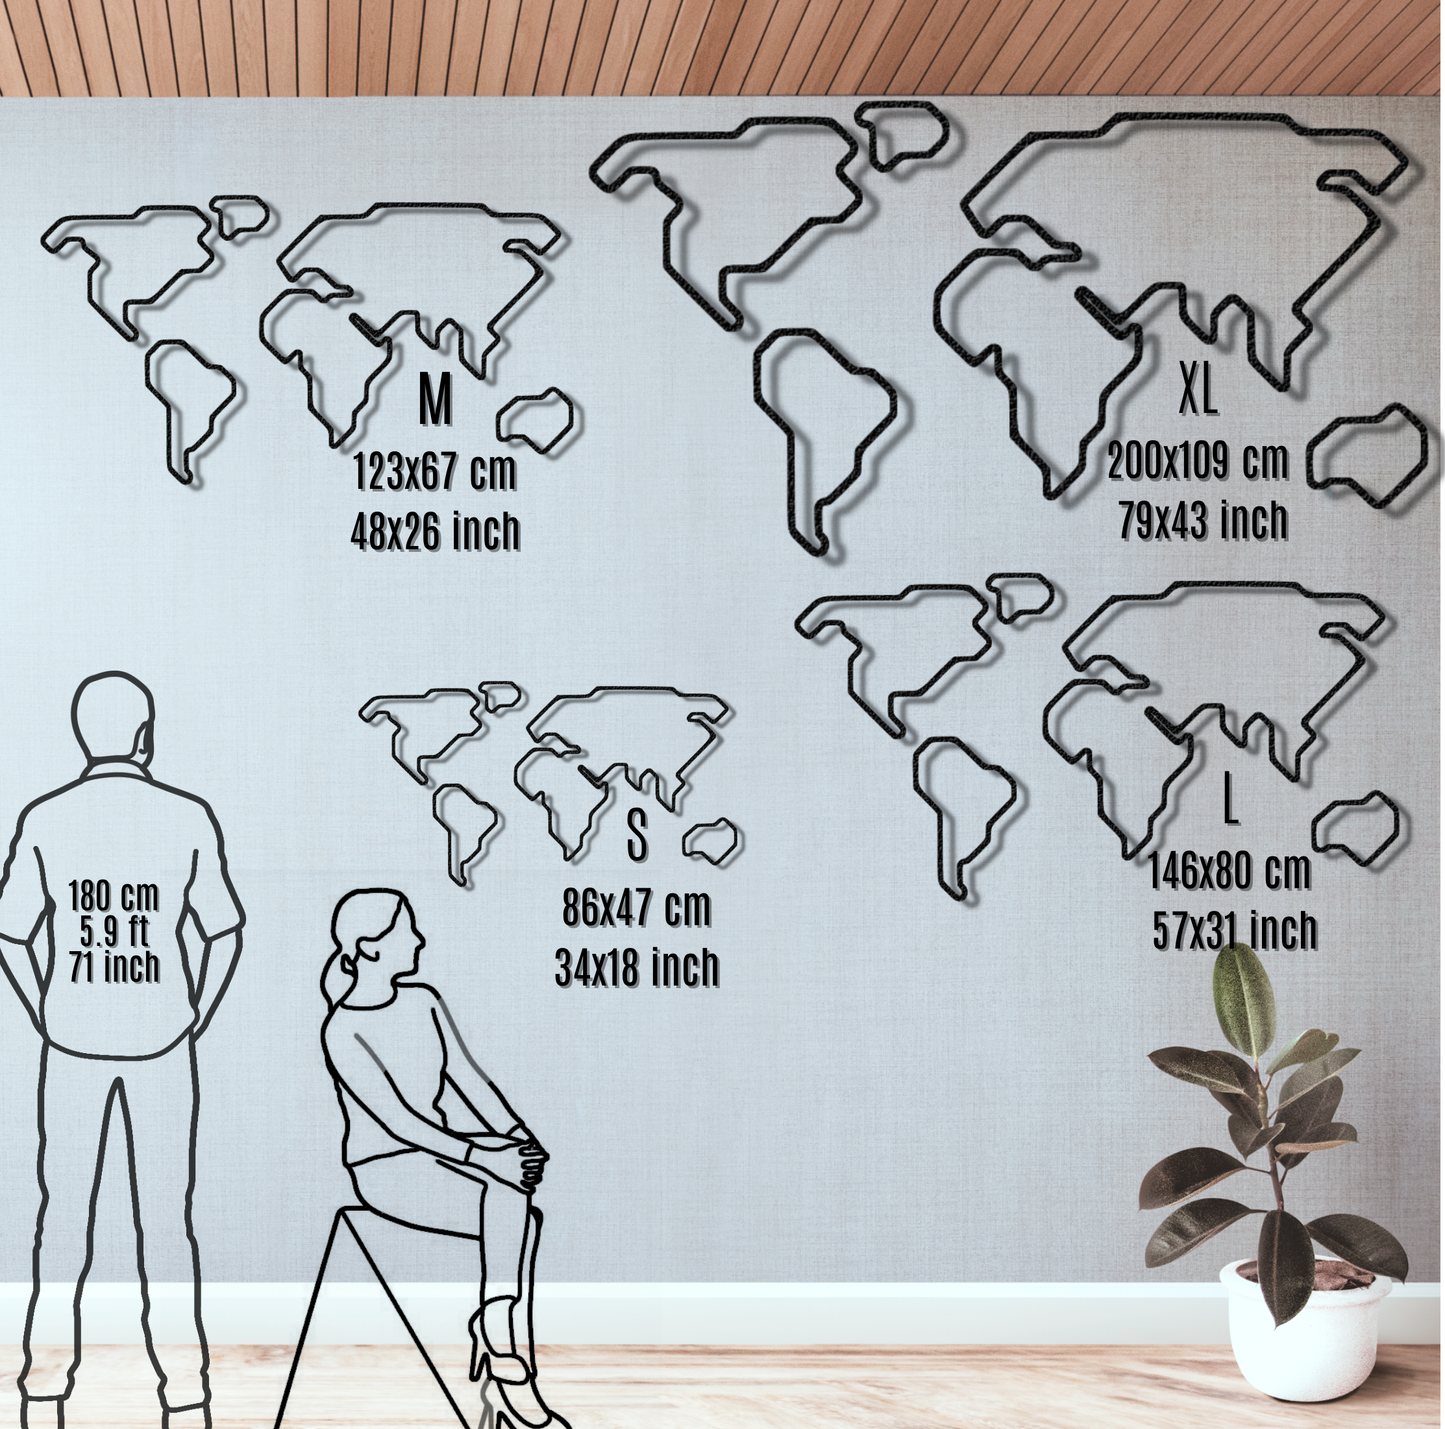 Large World Map Metal Wall Art